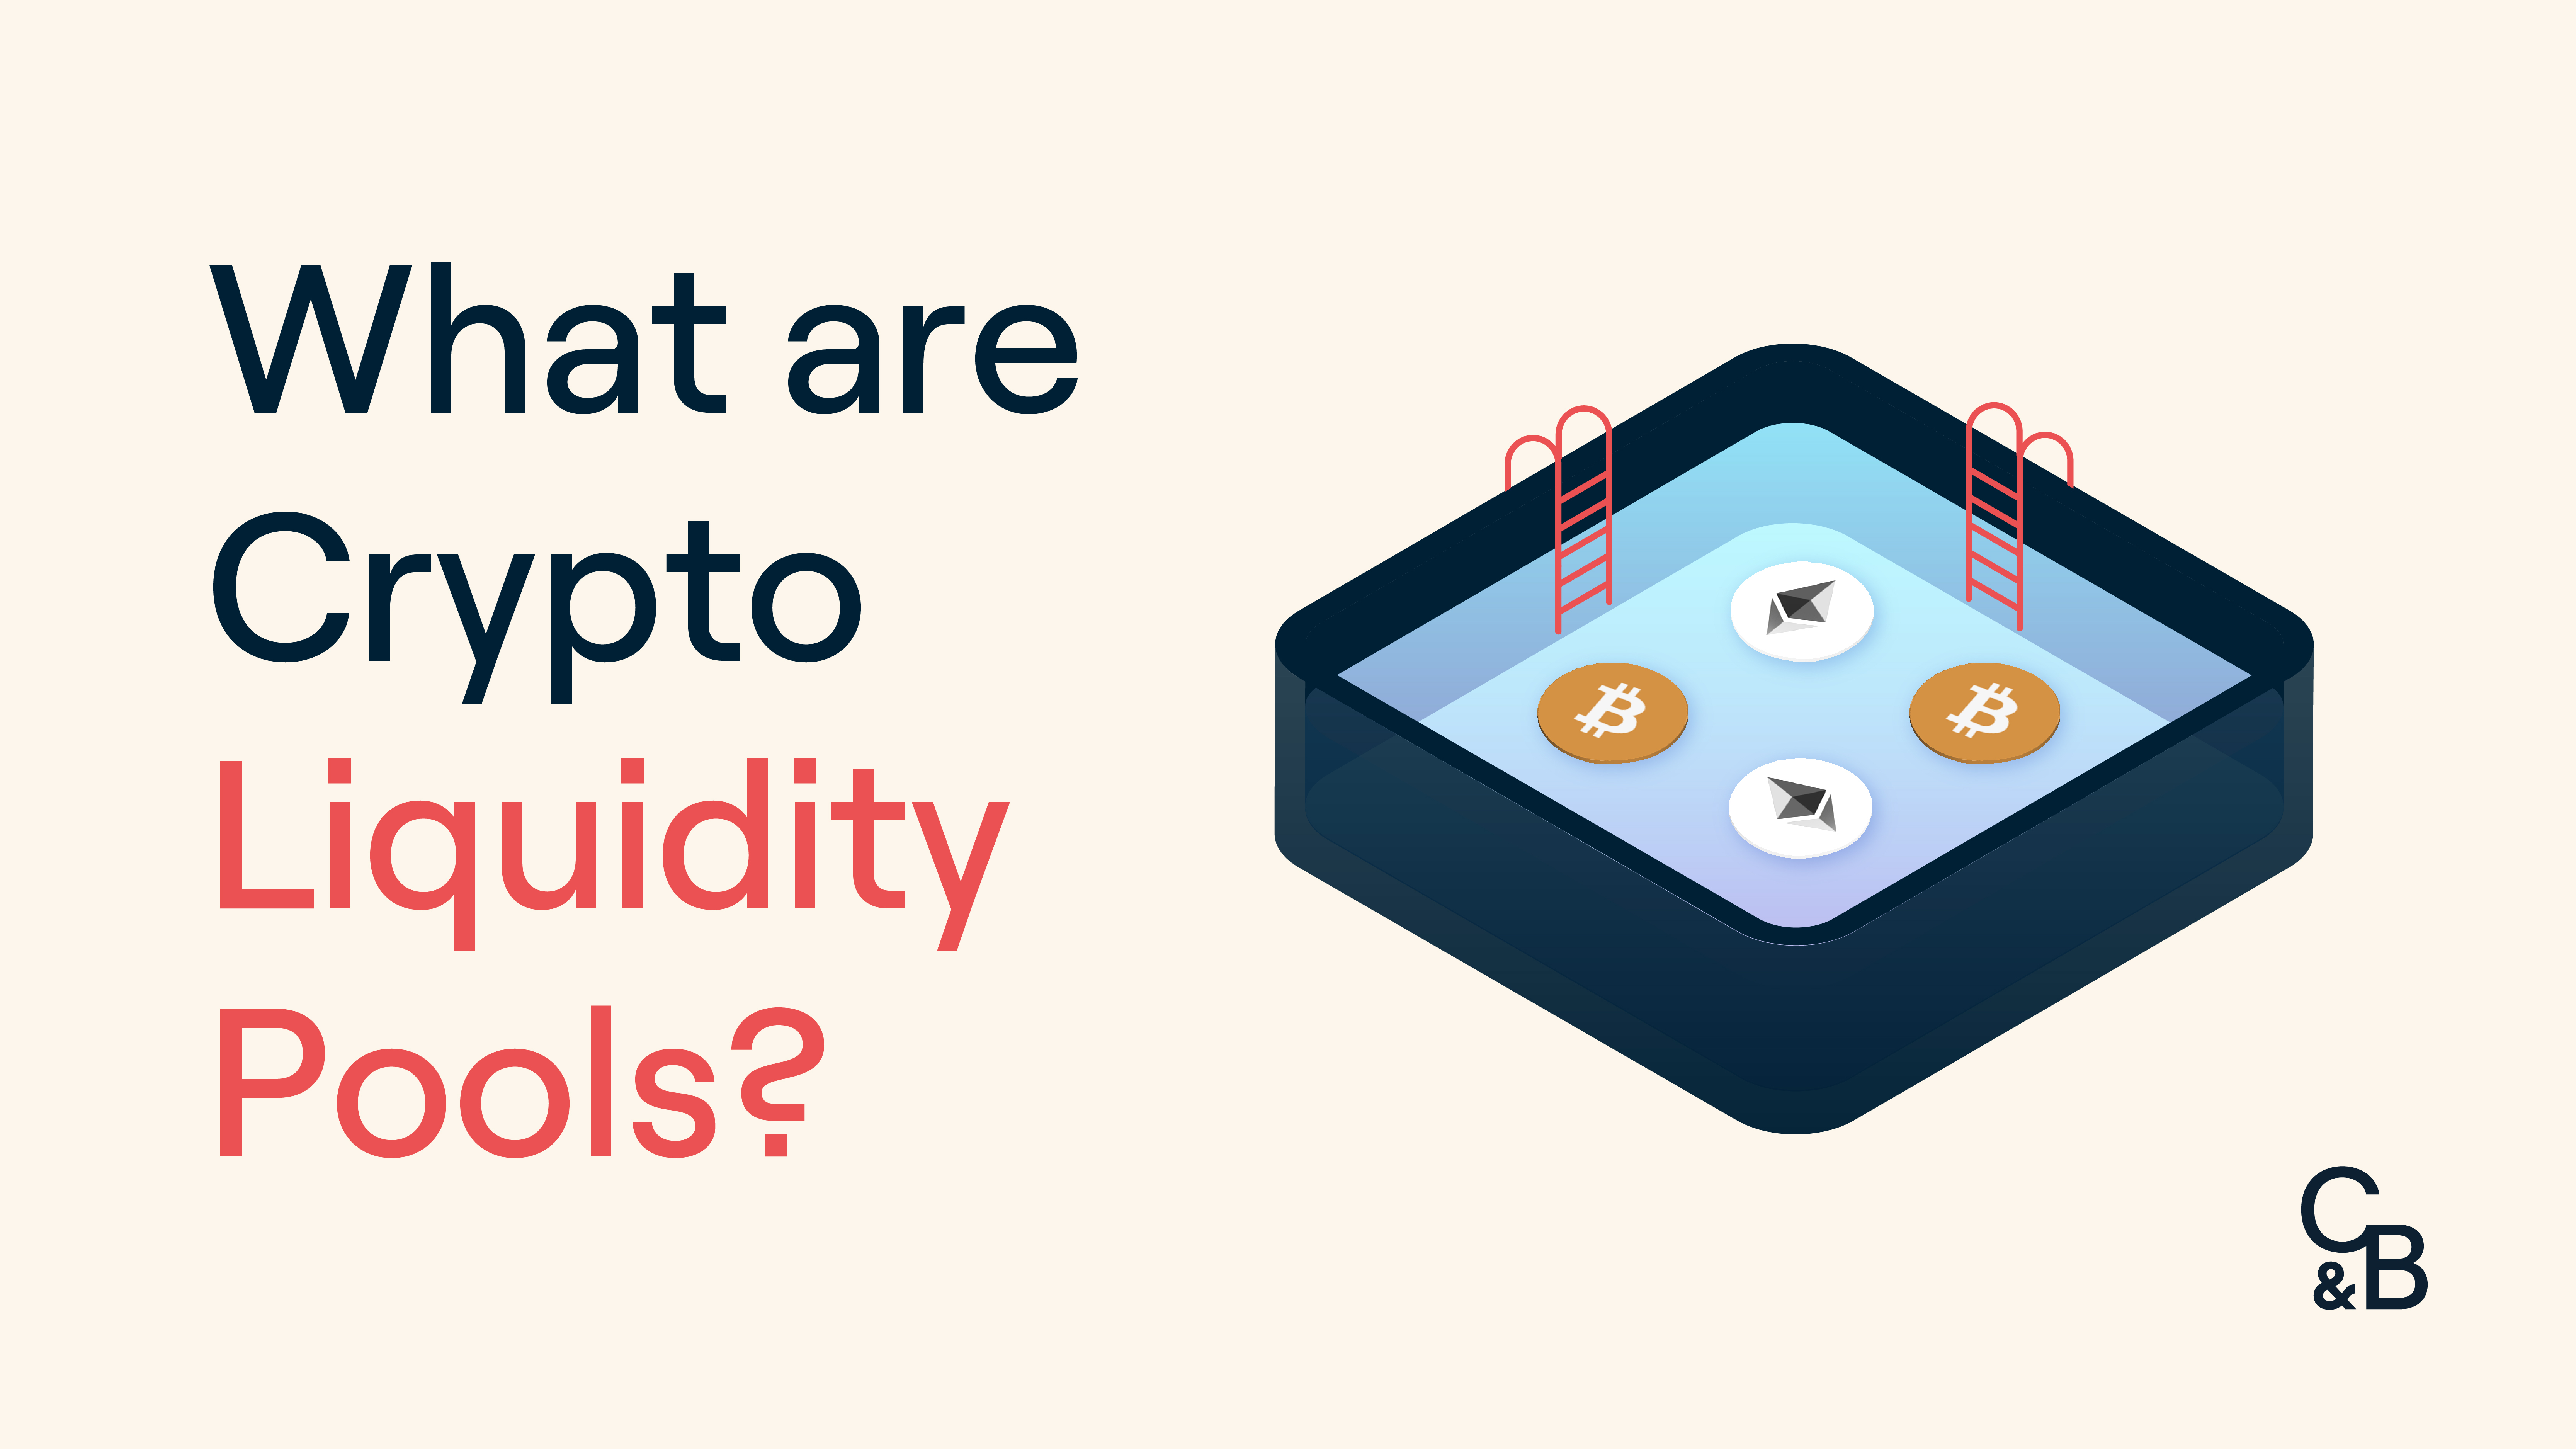 locked liquidity crypto